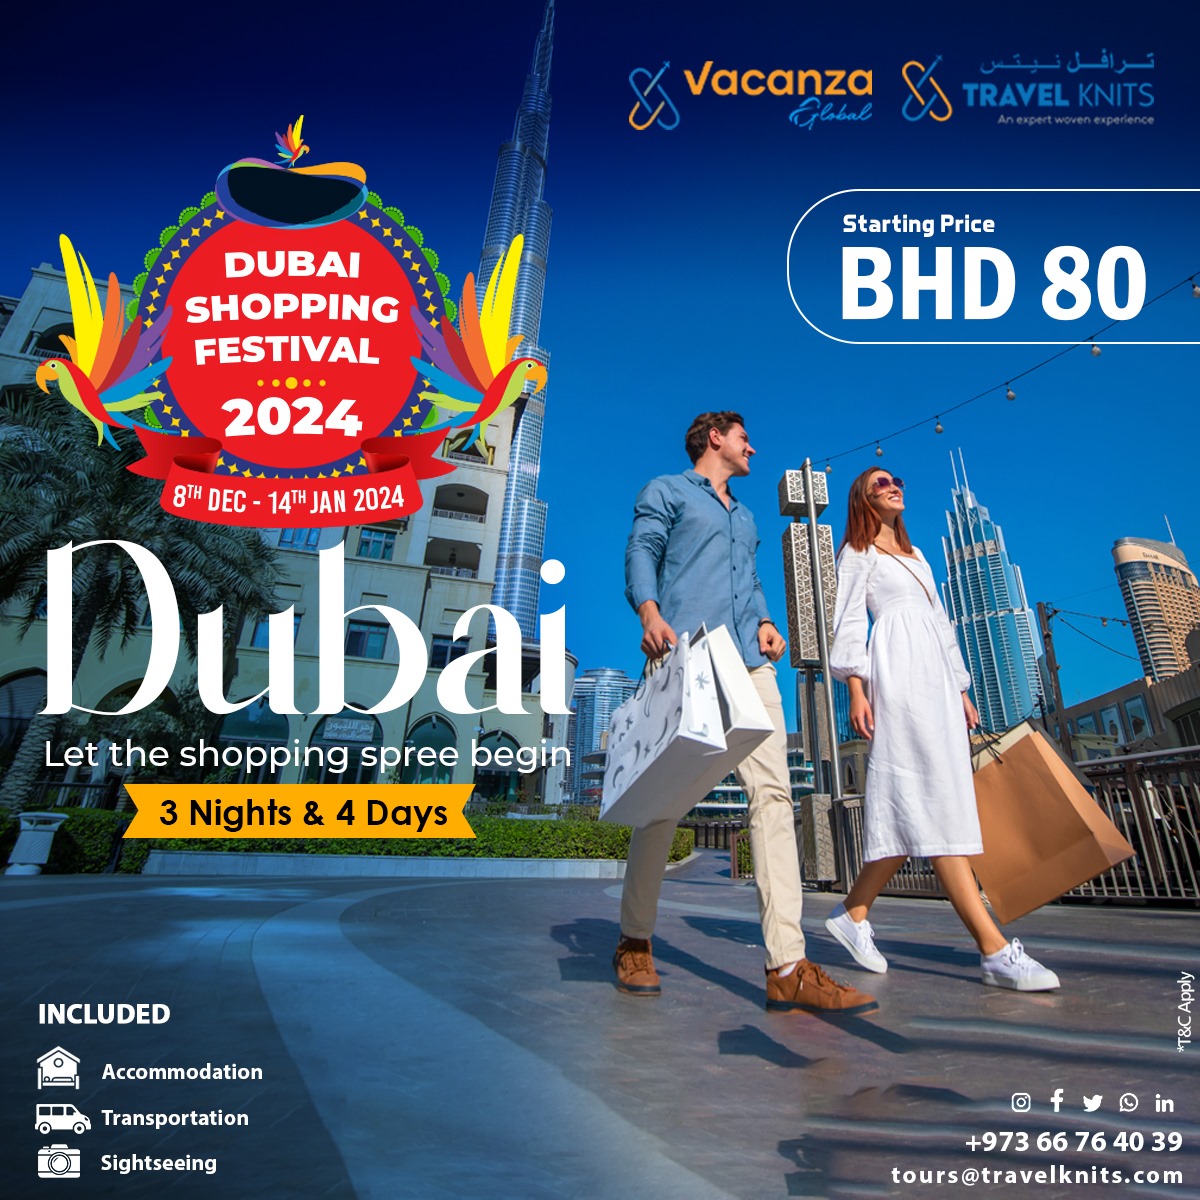 Dubai shopping festivalTour Packages - Book honeymoon ,family,adventure tour packages to Dubai shopping festival|Travel Knits